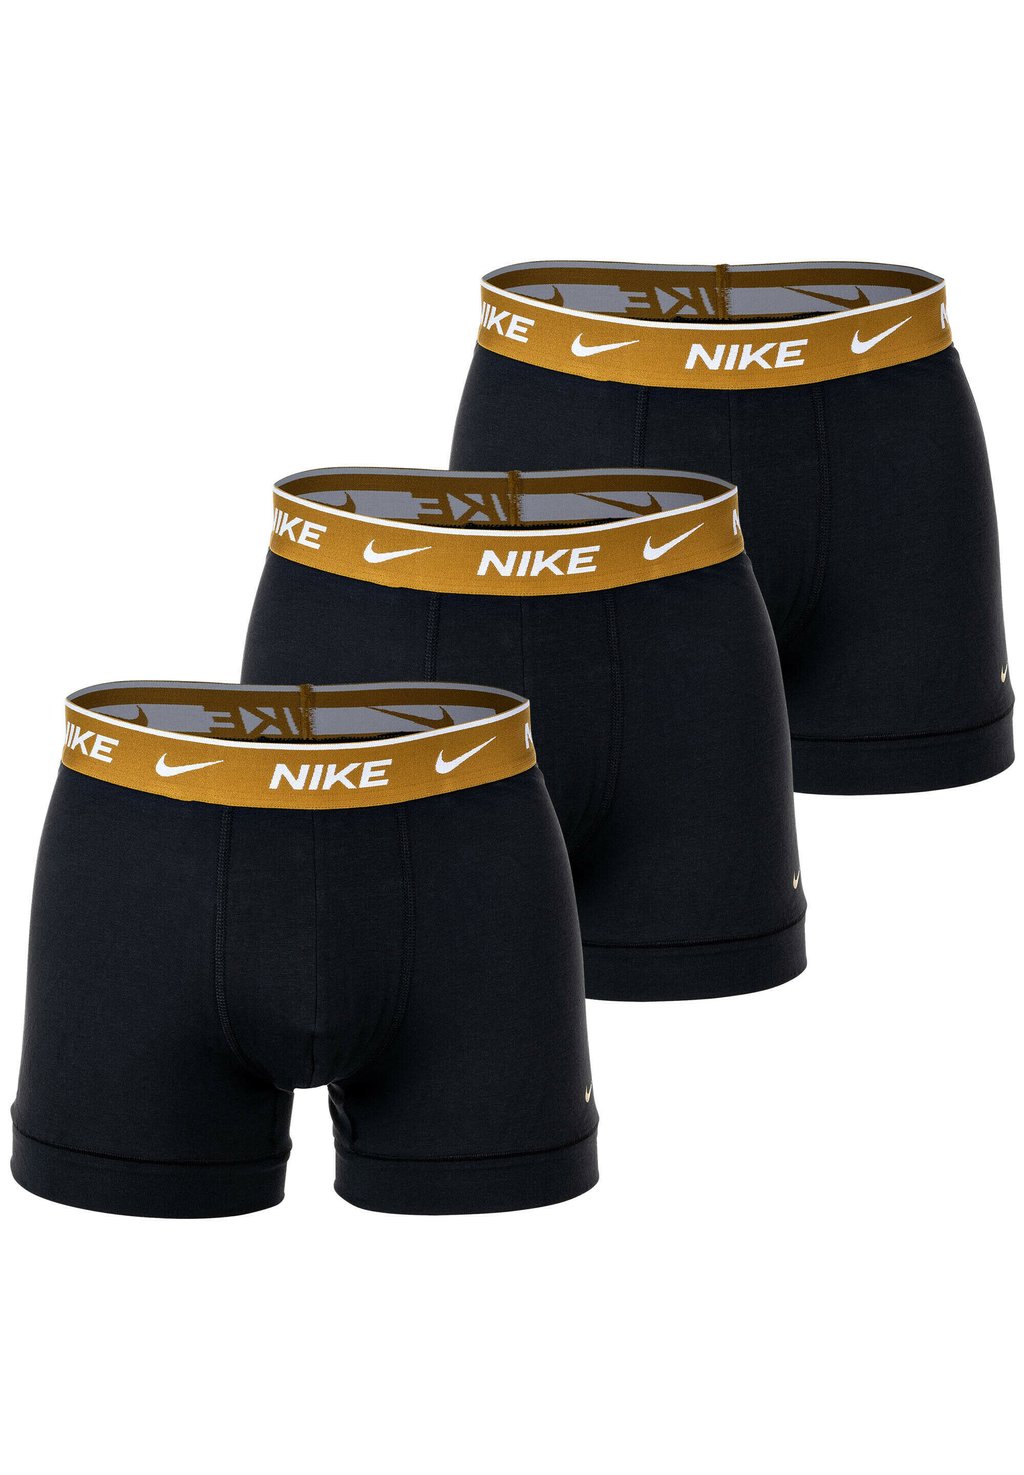 Трусики TRUNK 3 PACK Nike Underwear, цвет schwarz gold